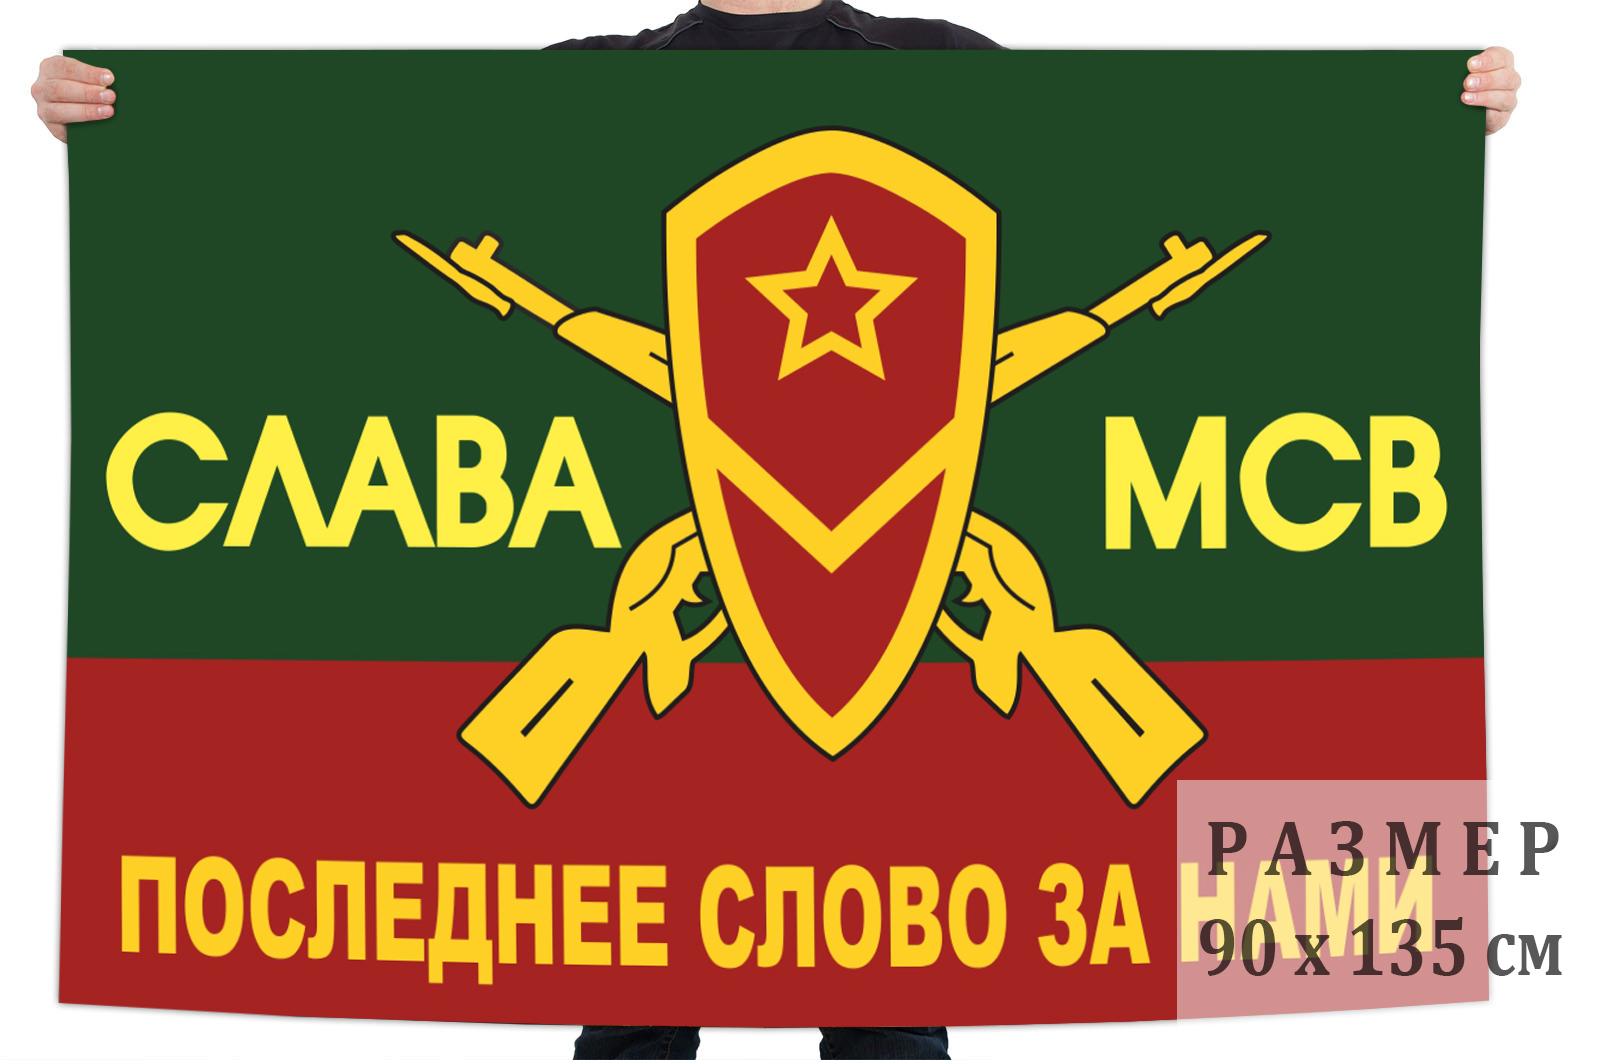 Заказать флаг "Слава МСВ" в Военпро